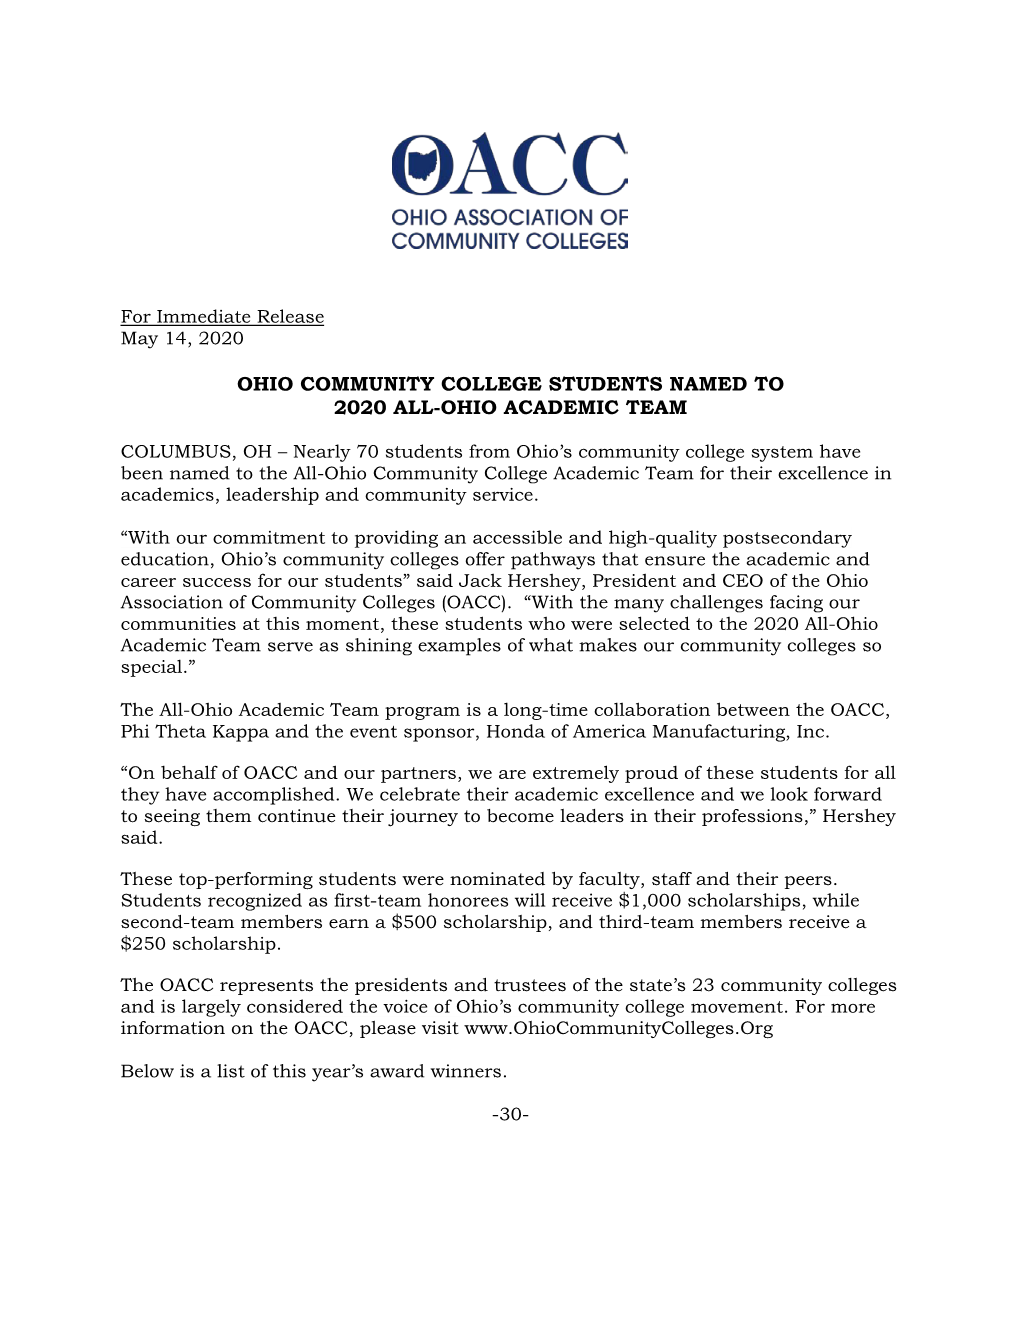 Ohio Community College Students Named to 2020 All-Ohio Academic Team